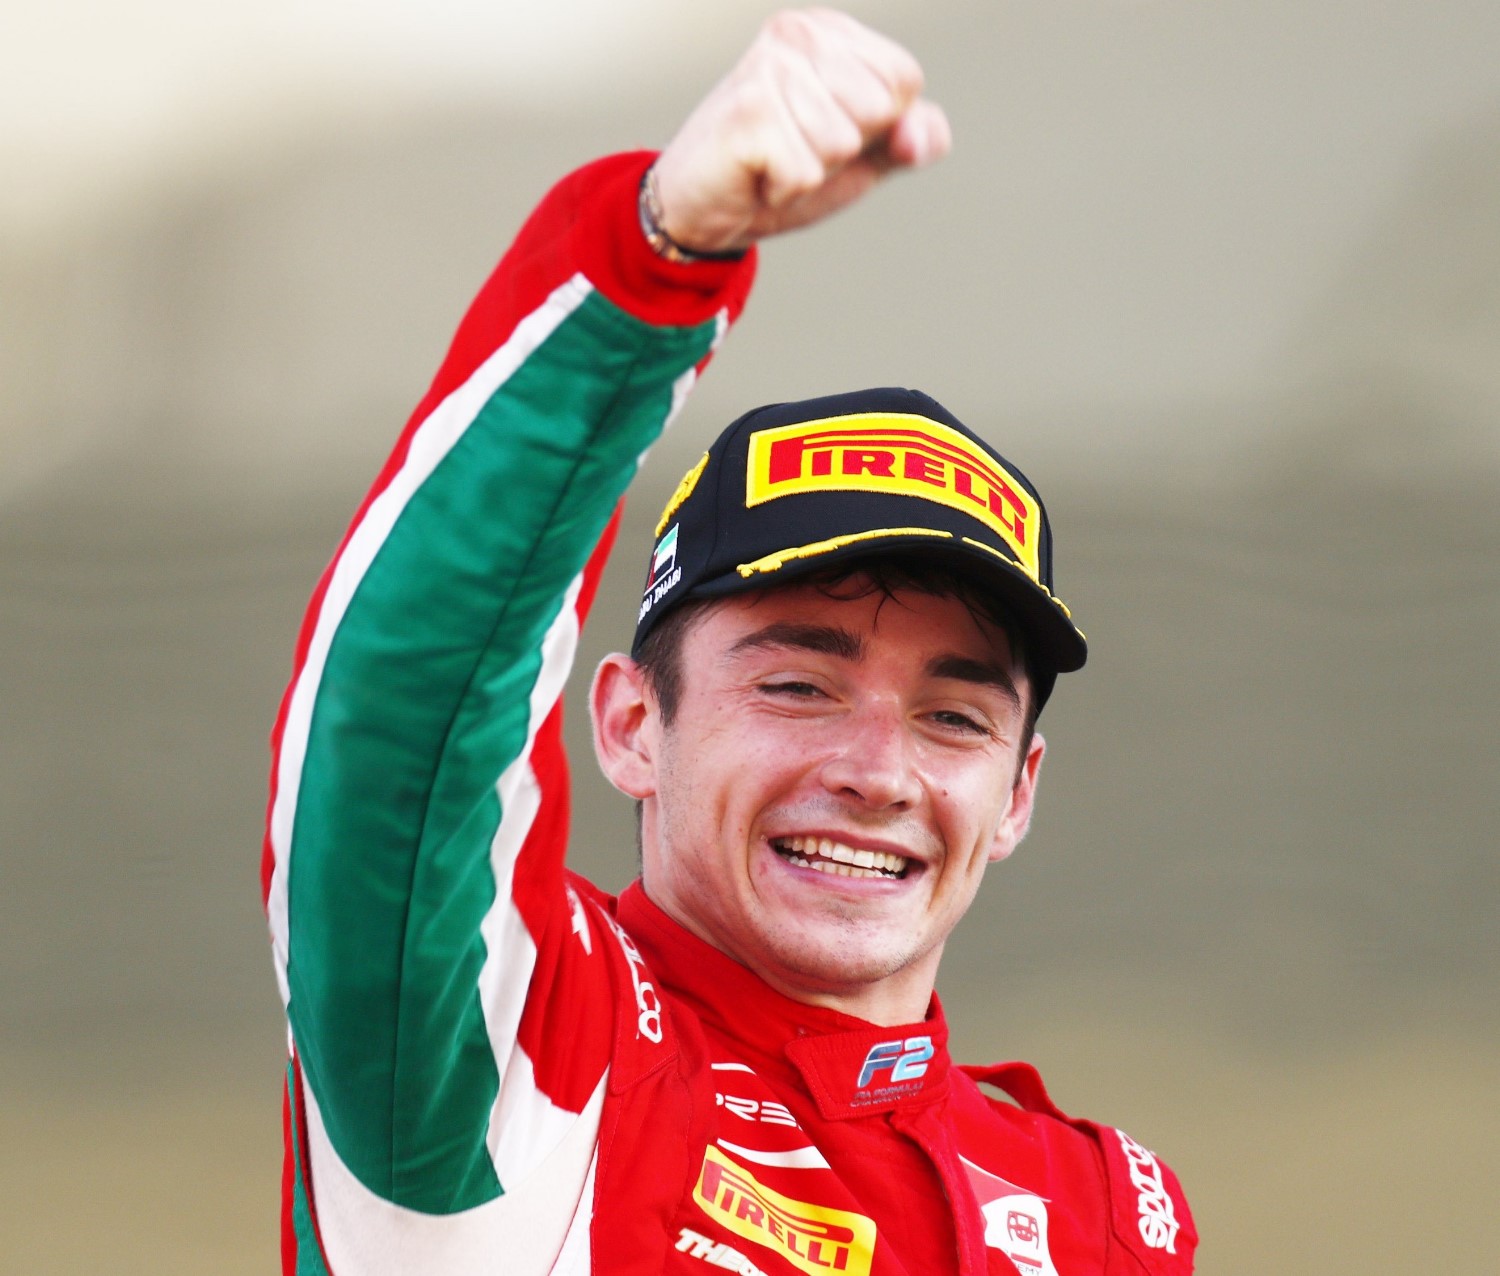 Charles Leclerc, the next Senna? We think not